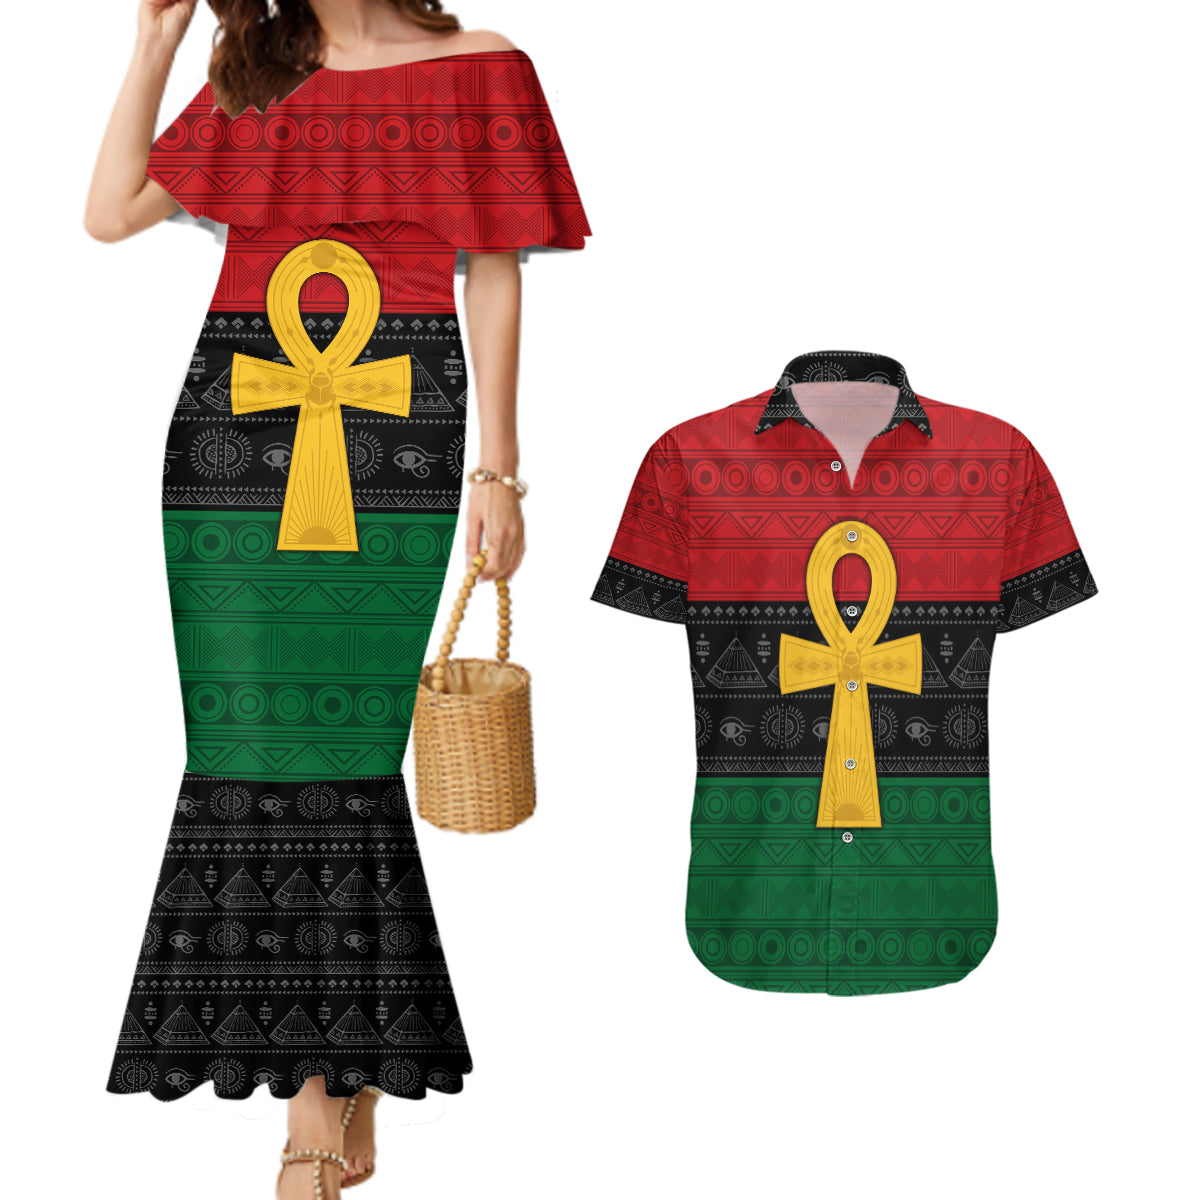 Pan African Ankh Couples Matching Mermaid Dress and Hawaiian Shirt Egyptian Cross